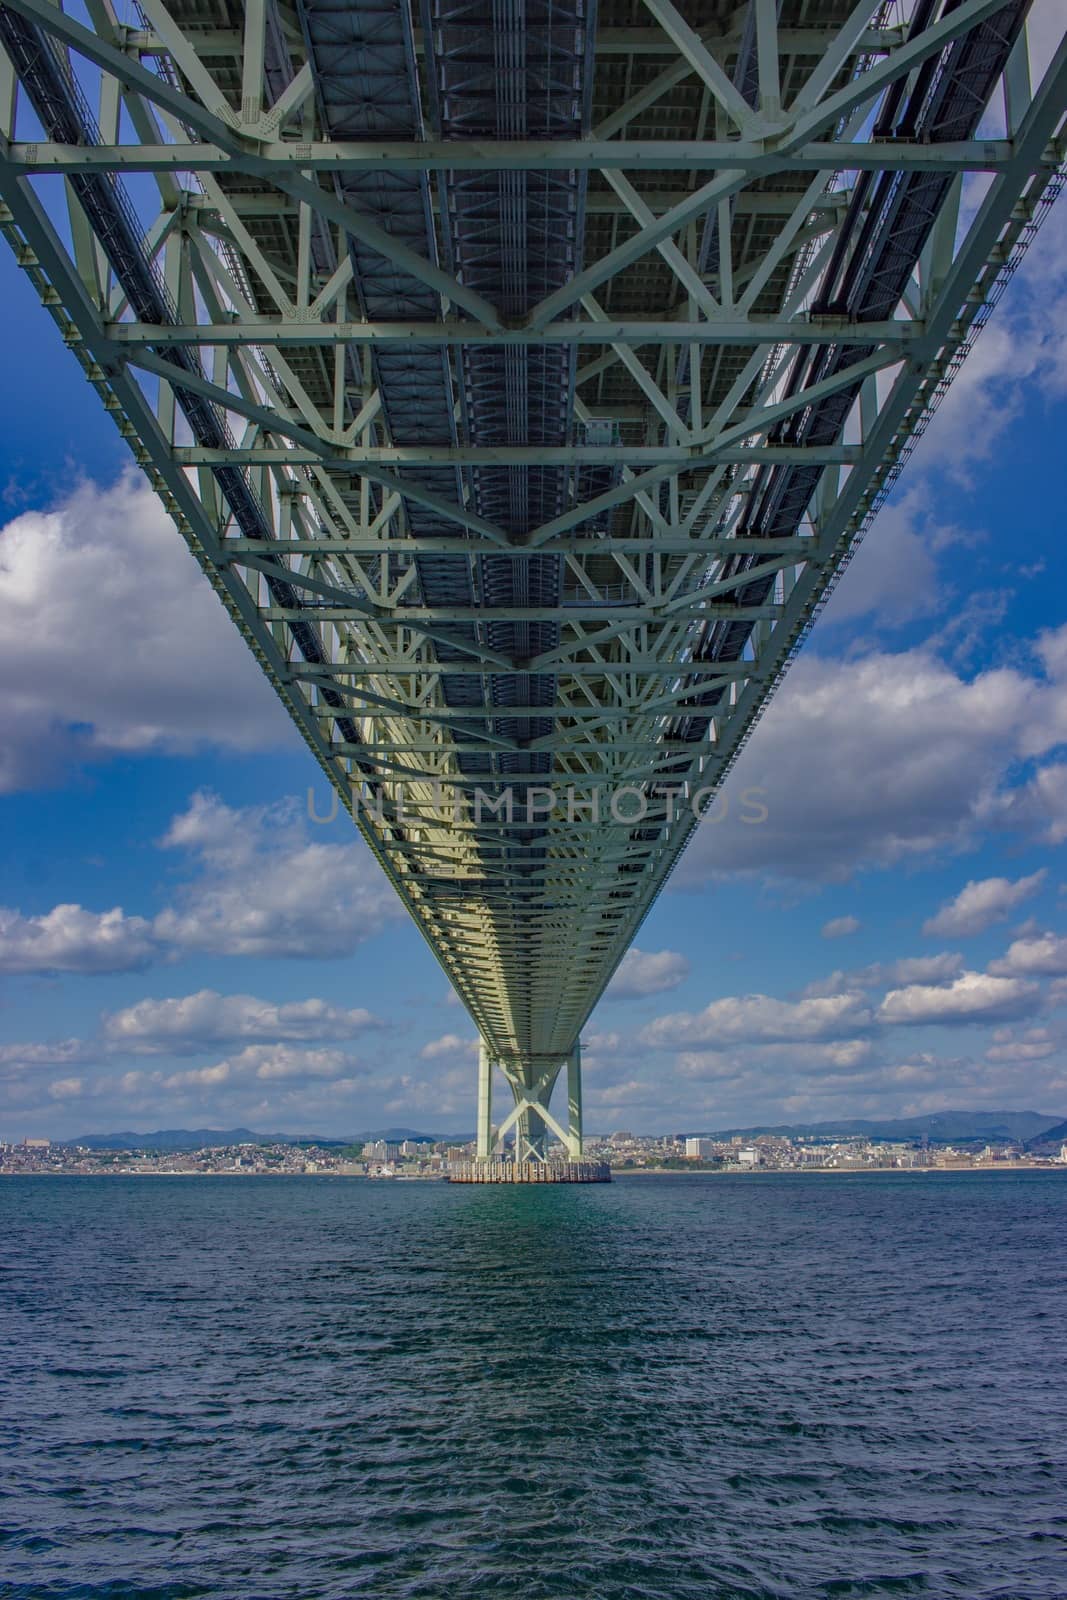 View from under the world's longest suspension bridge.